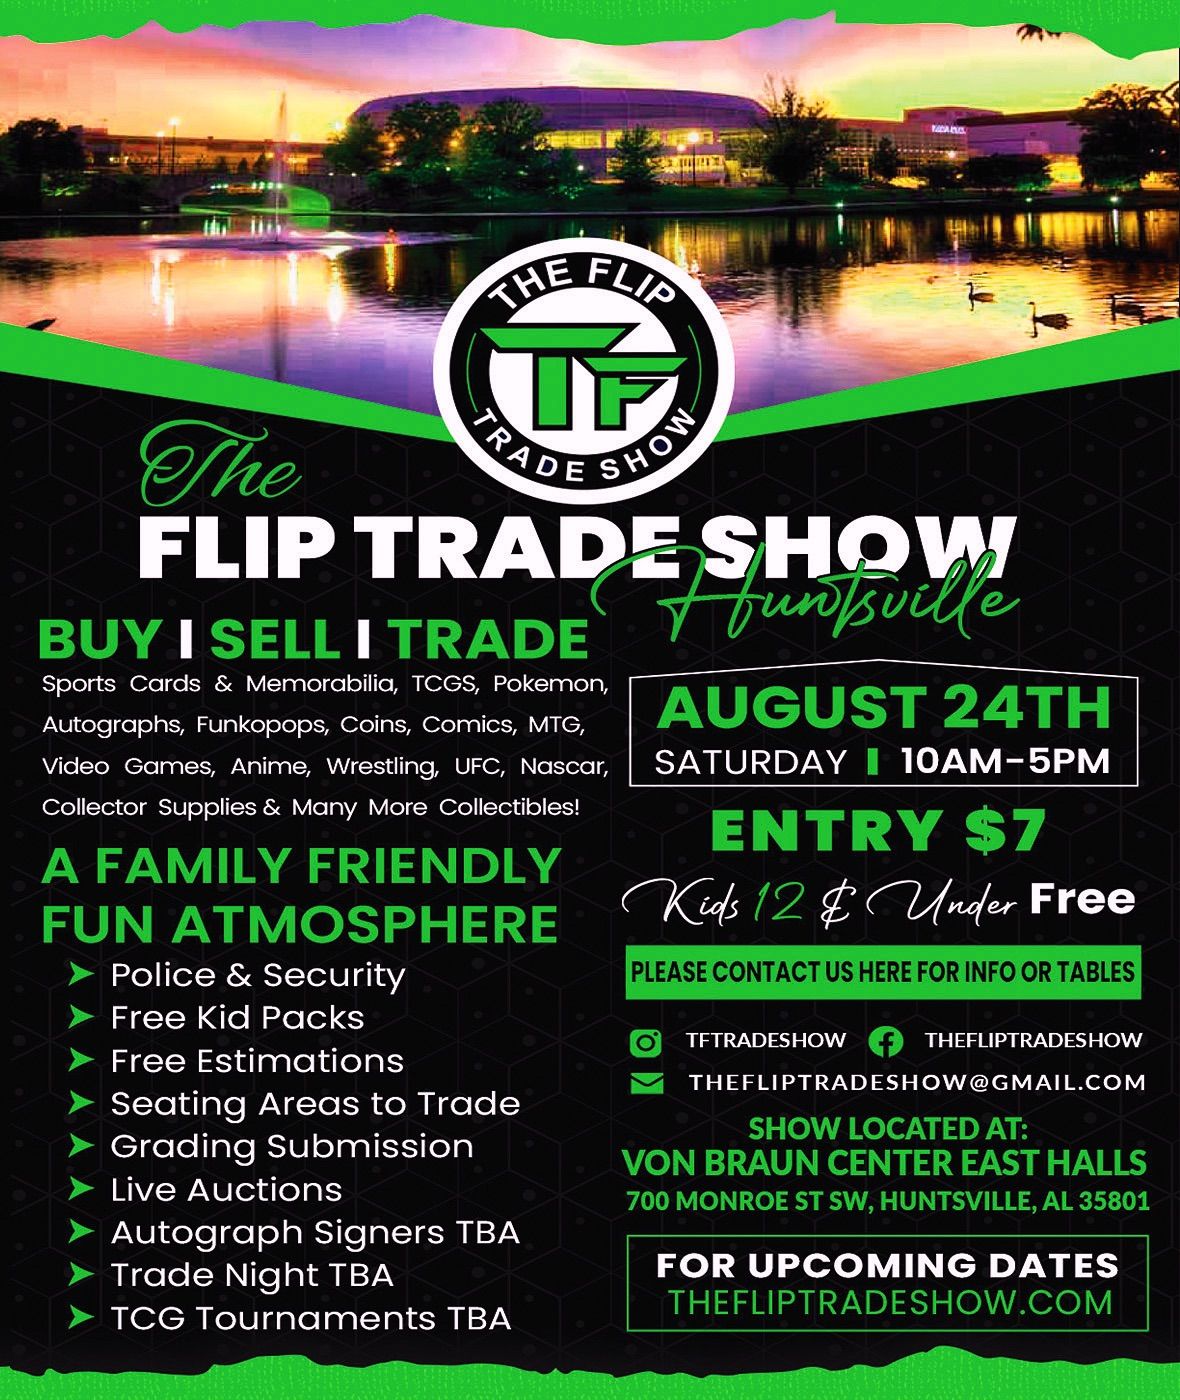 The Flip Trade Show Huntsville VBC 